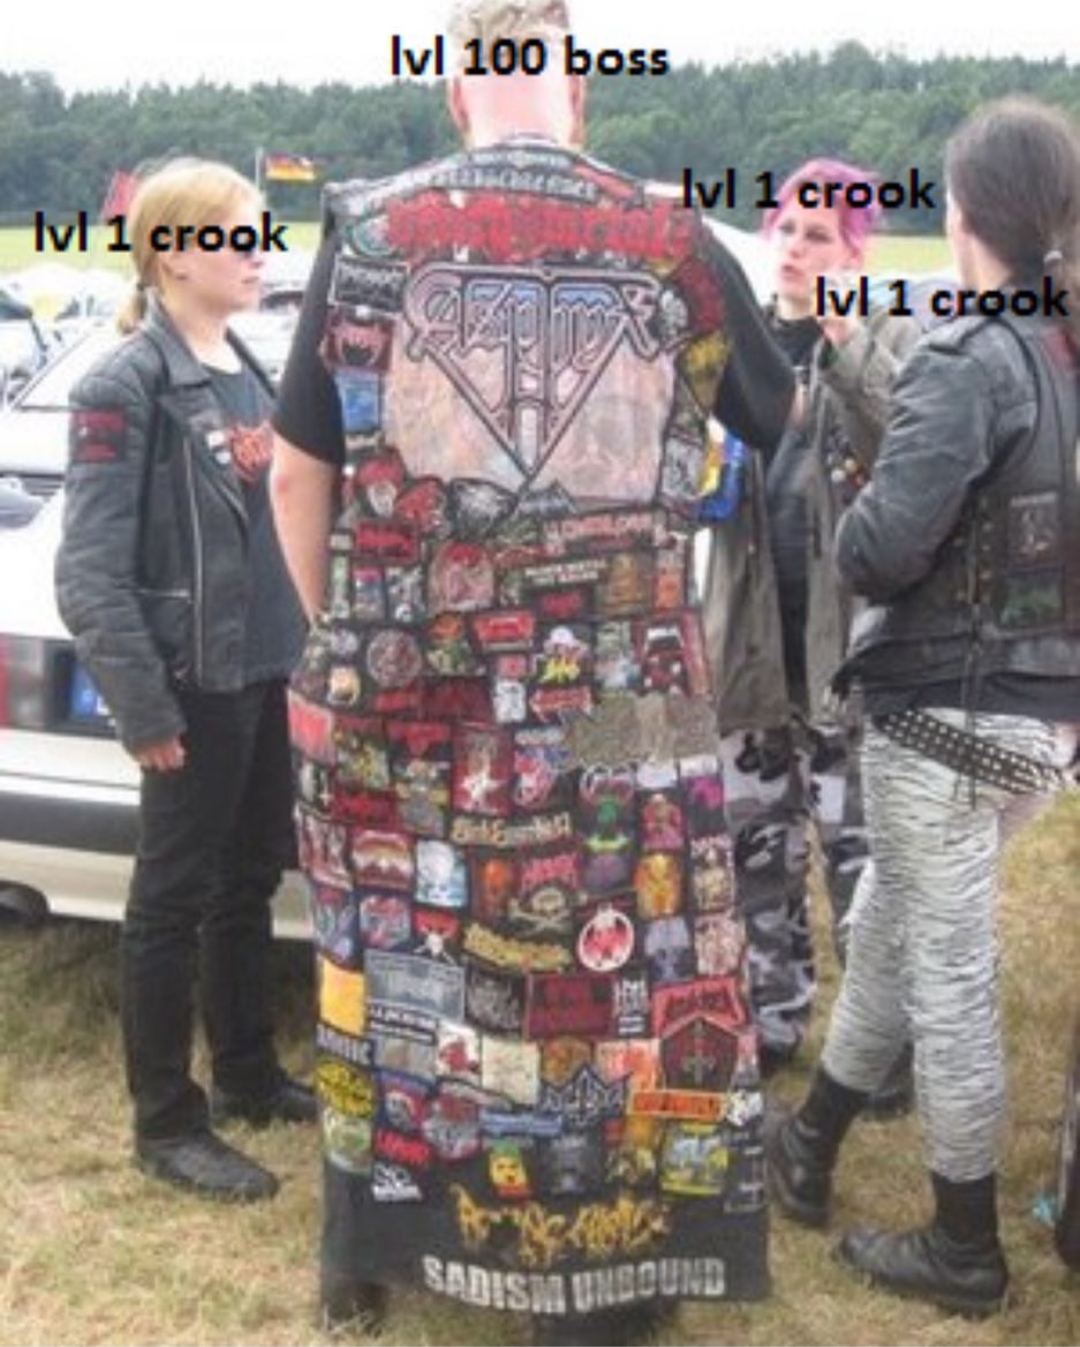 biggest battle jacket - lvl 100 boss Ivi 1 crook lvl 1 crook lvl 1 crook